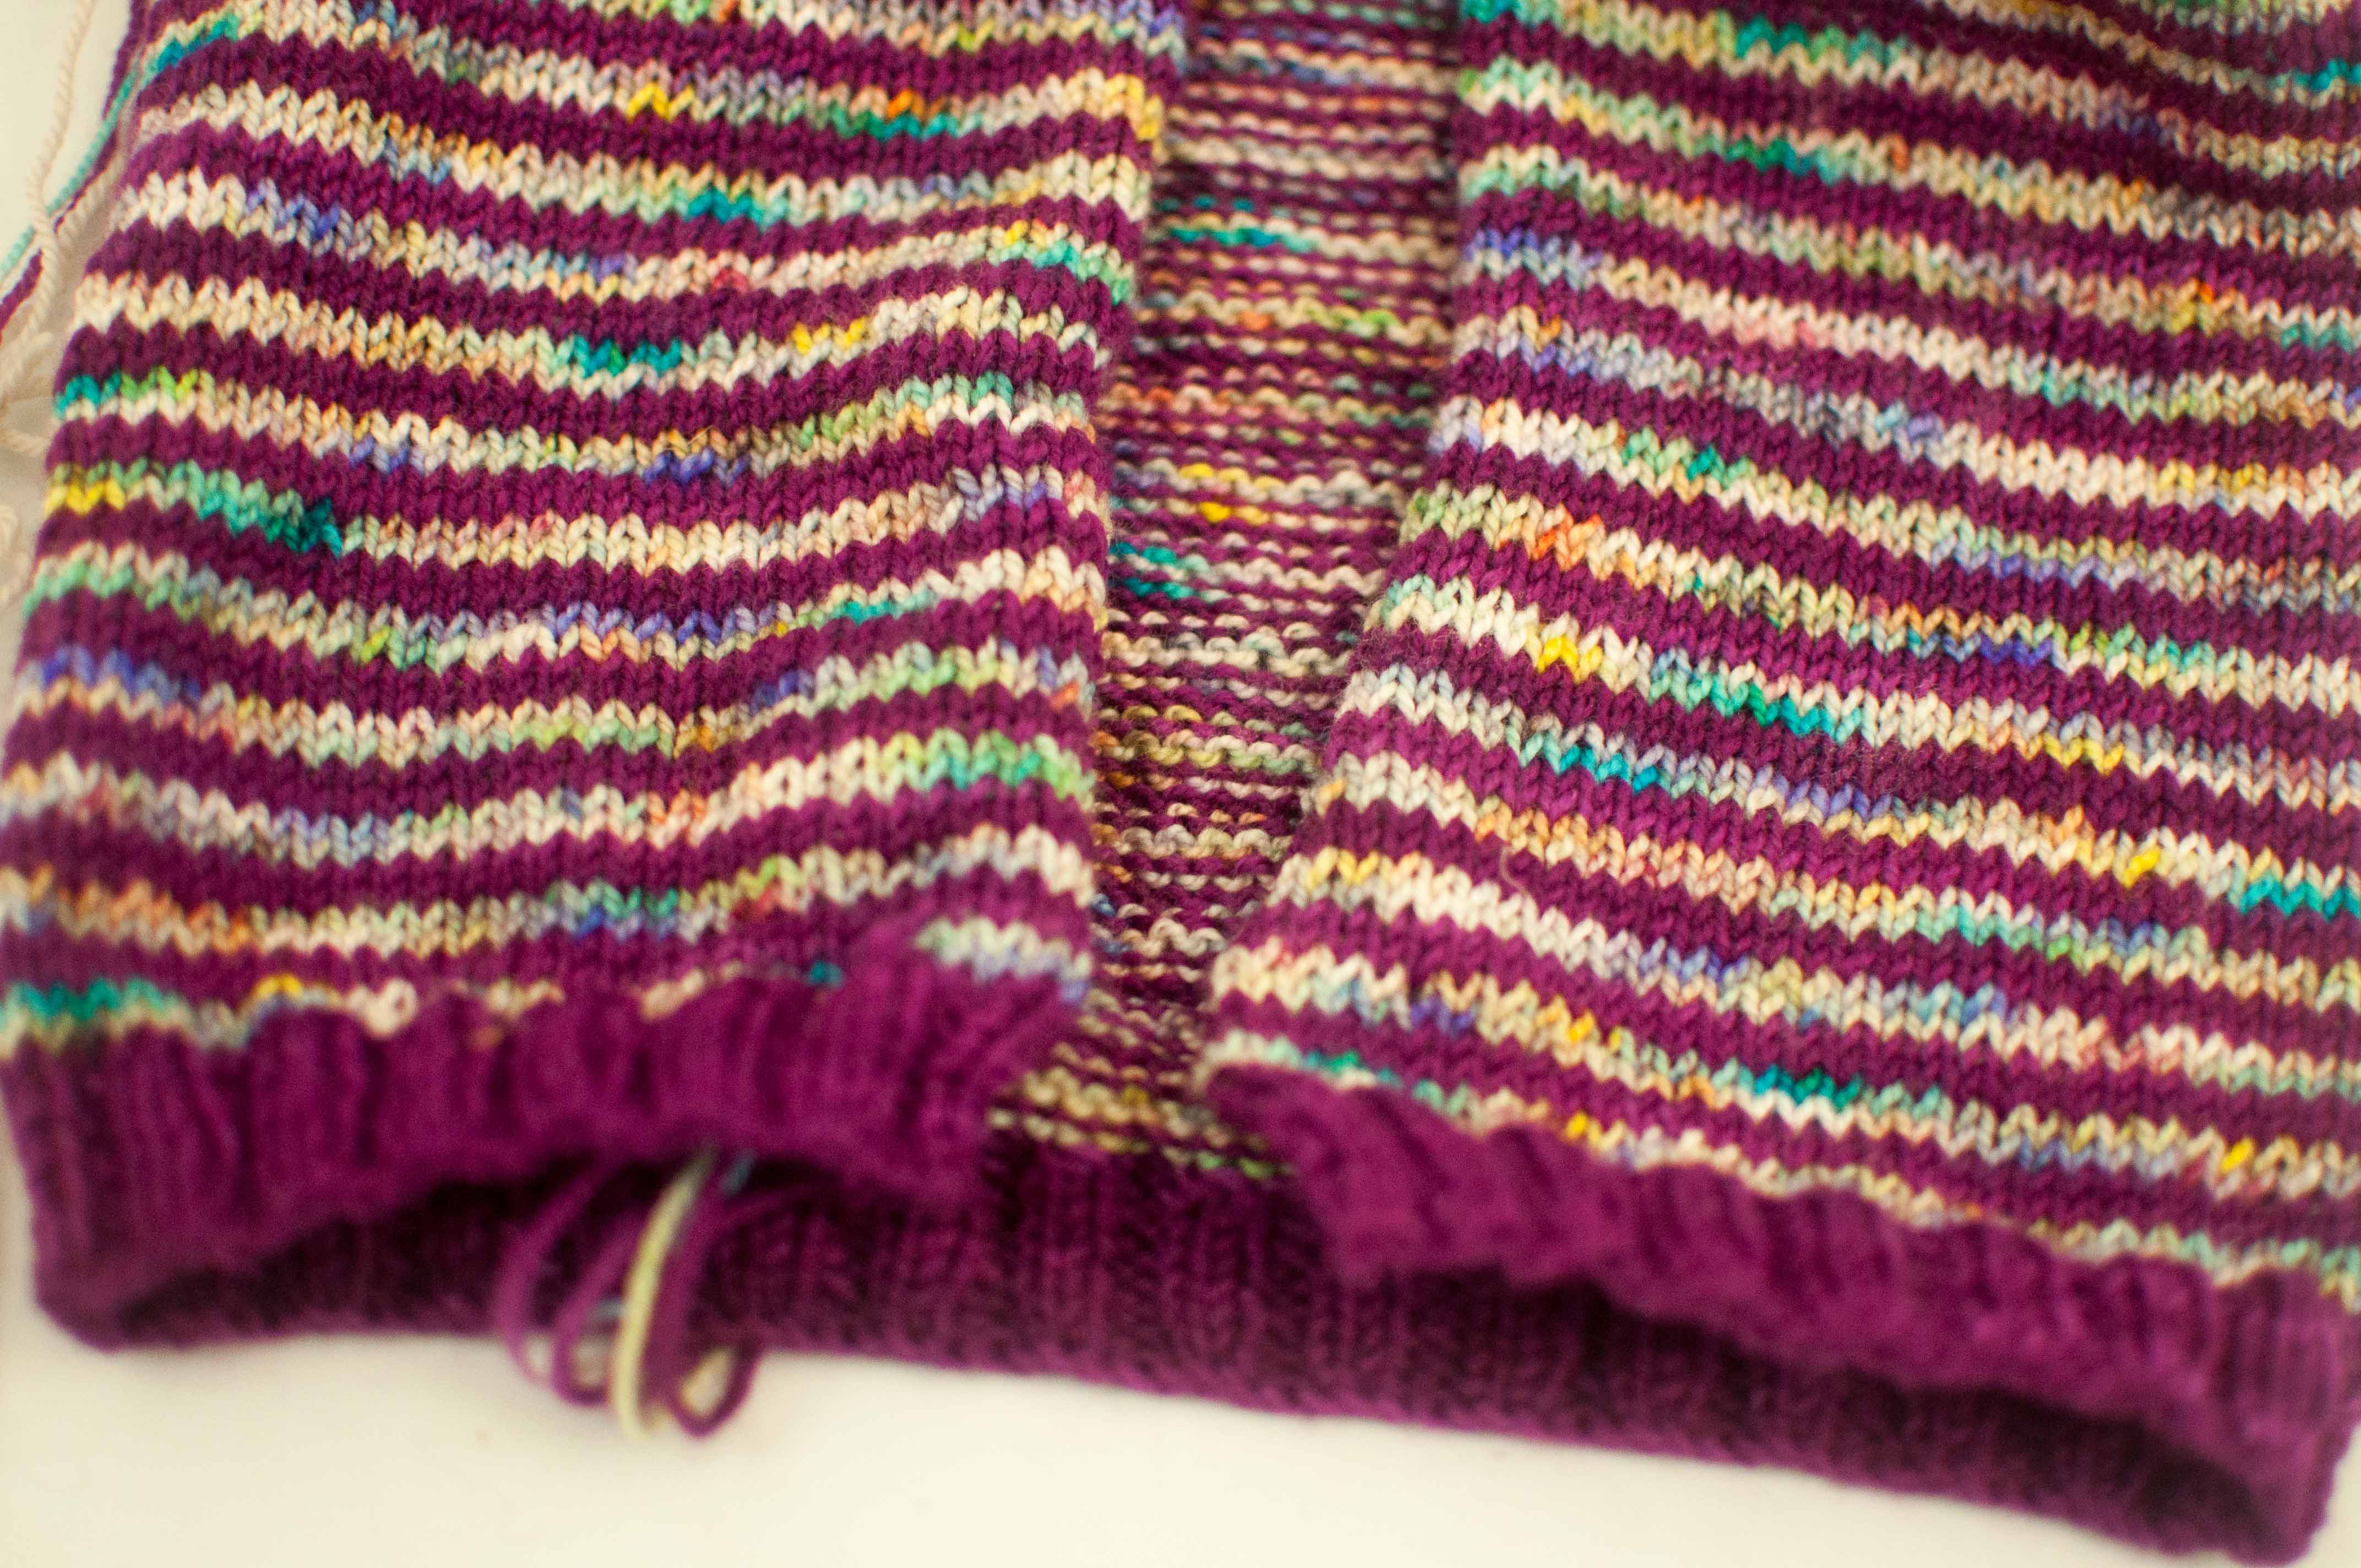 Mood boosting knits